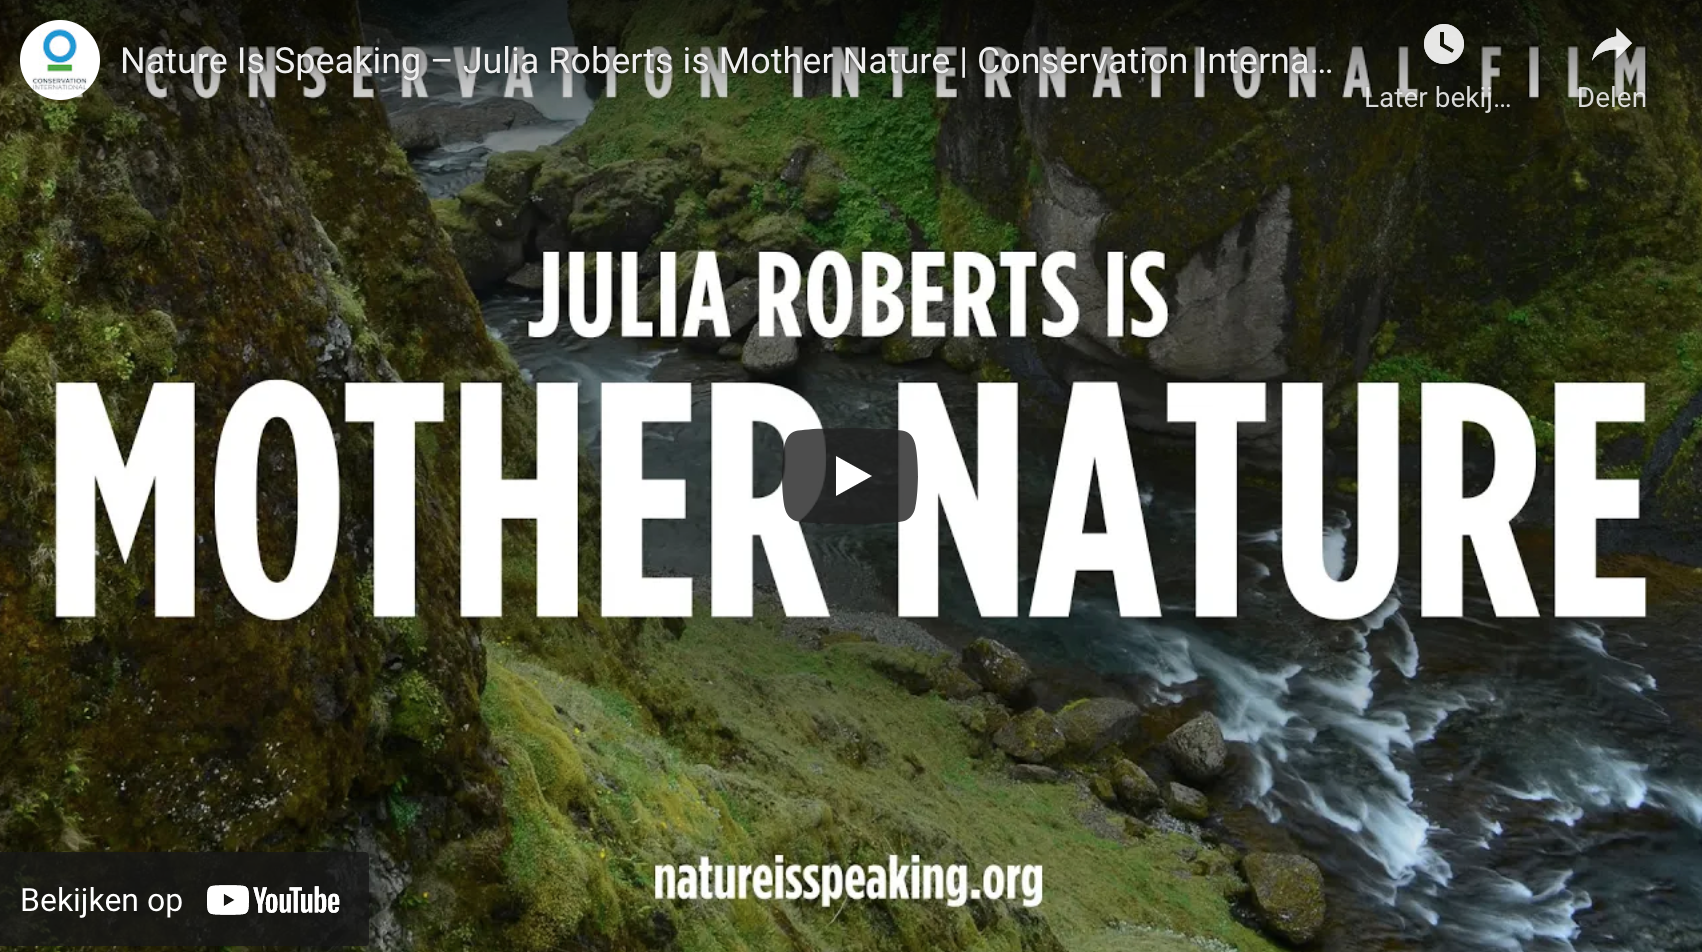 Indrukwekkende videoreeks laat natuur aan het woord